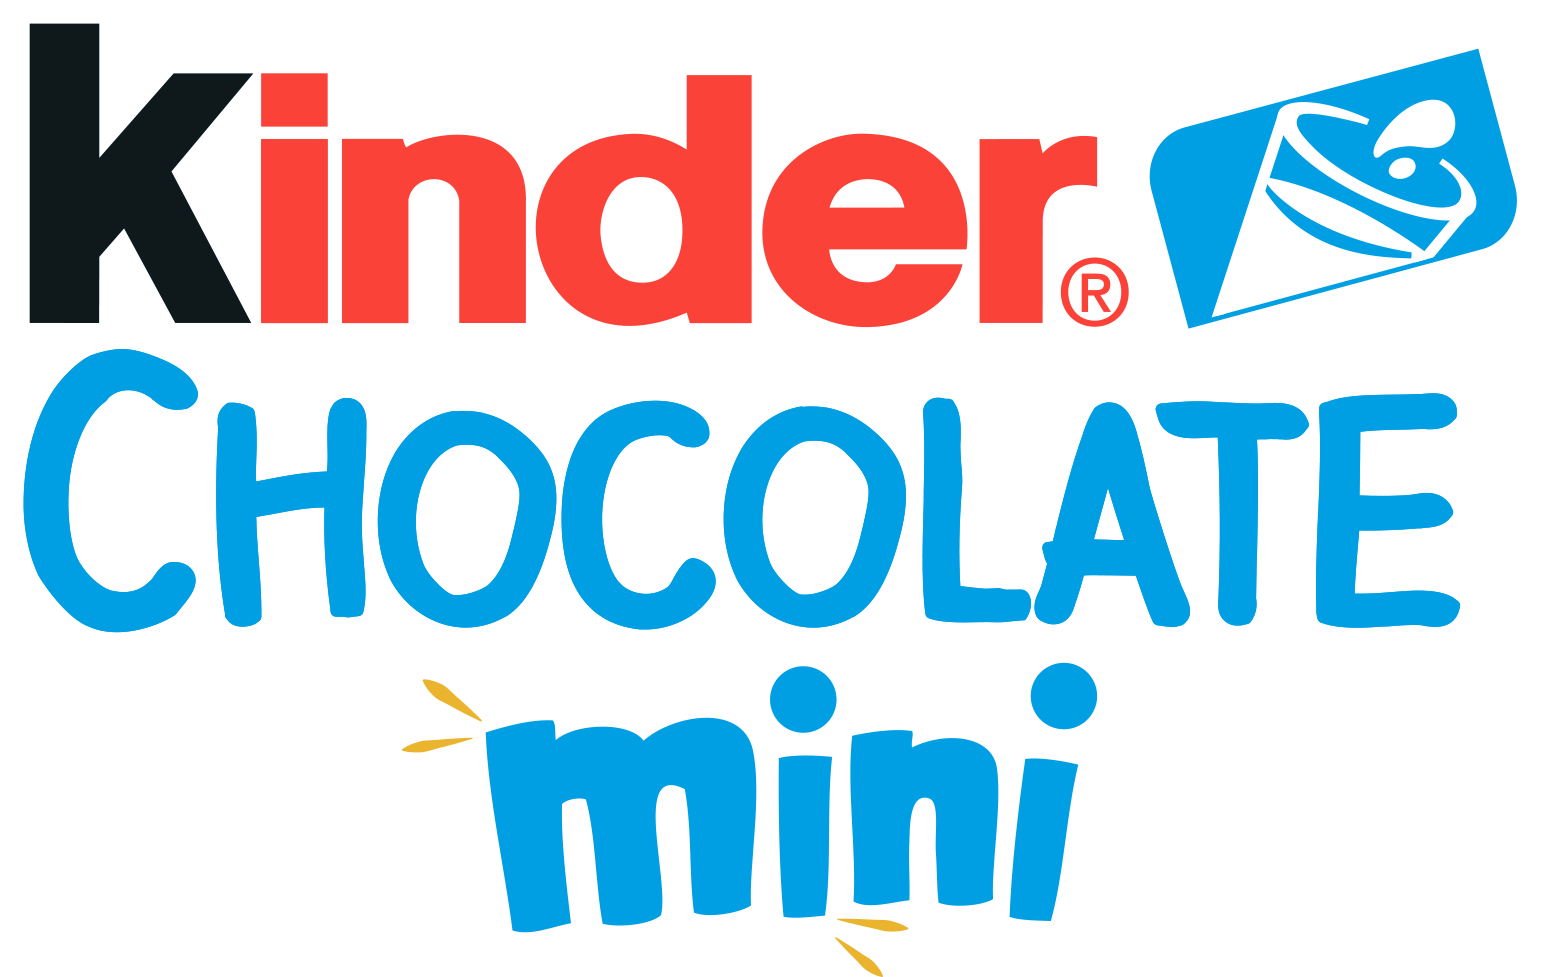 Kinder Chocolate Mini logotype